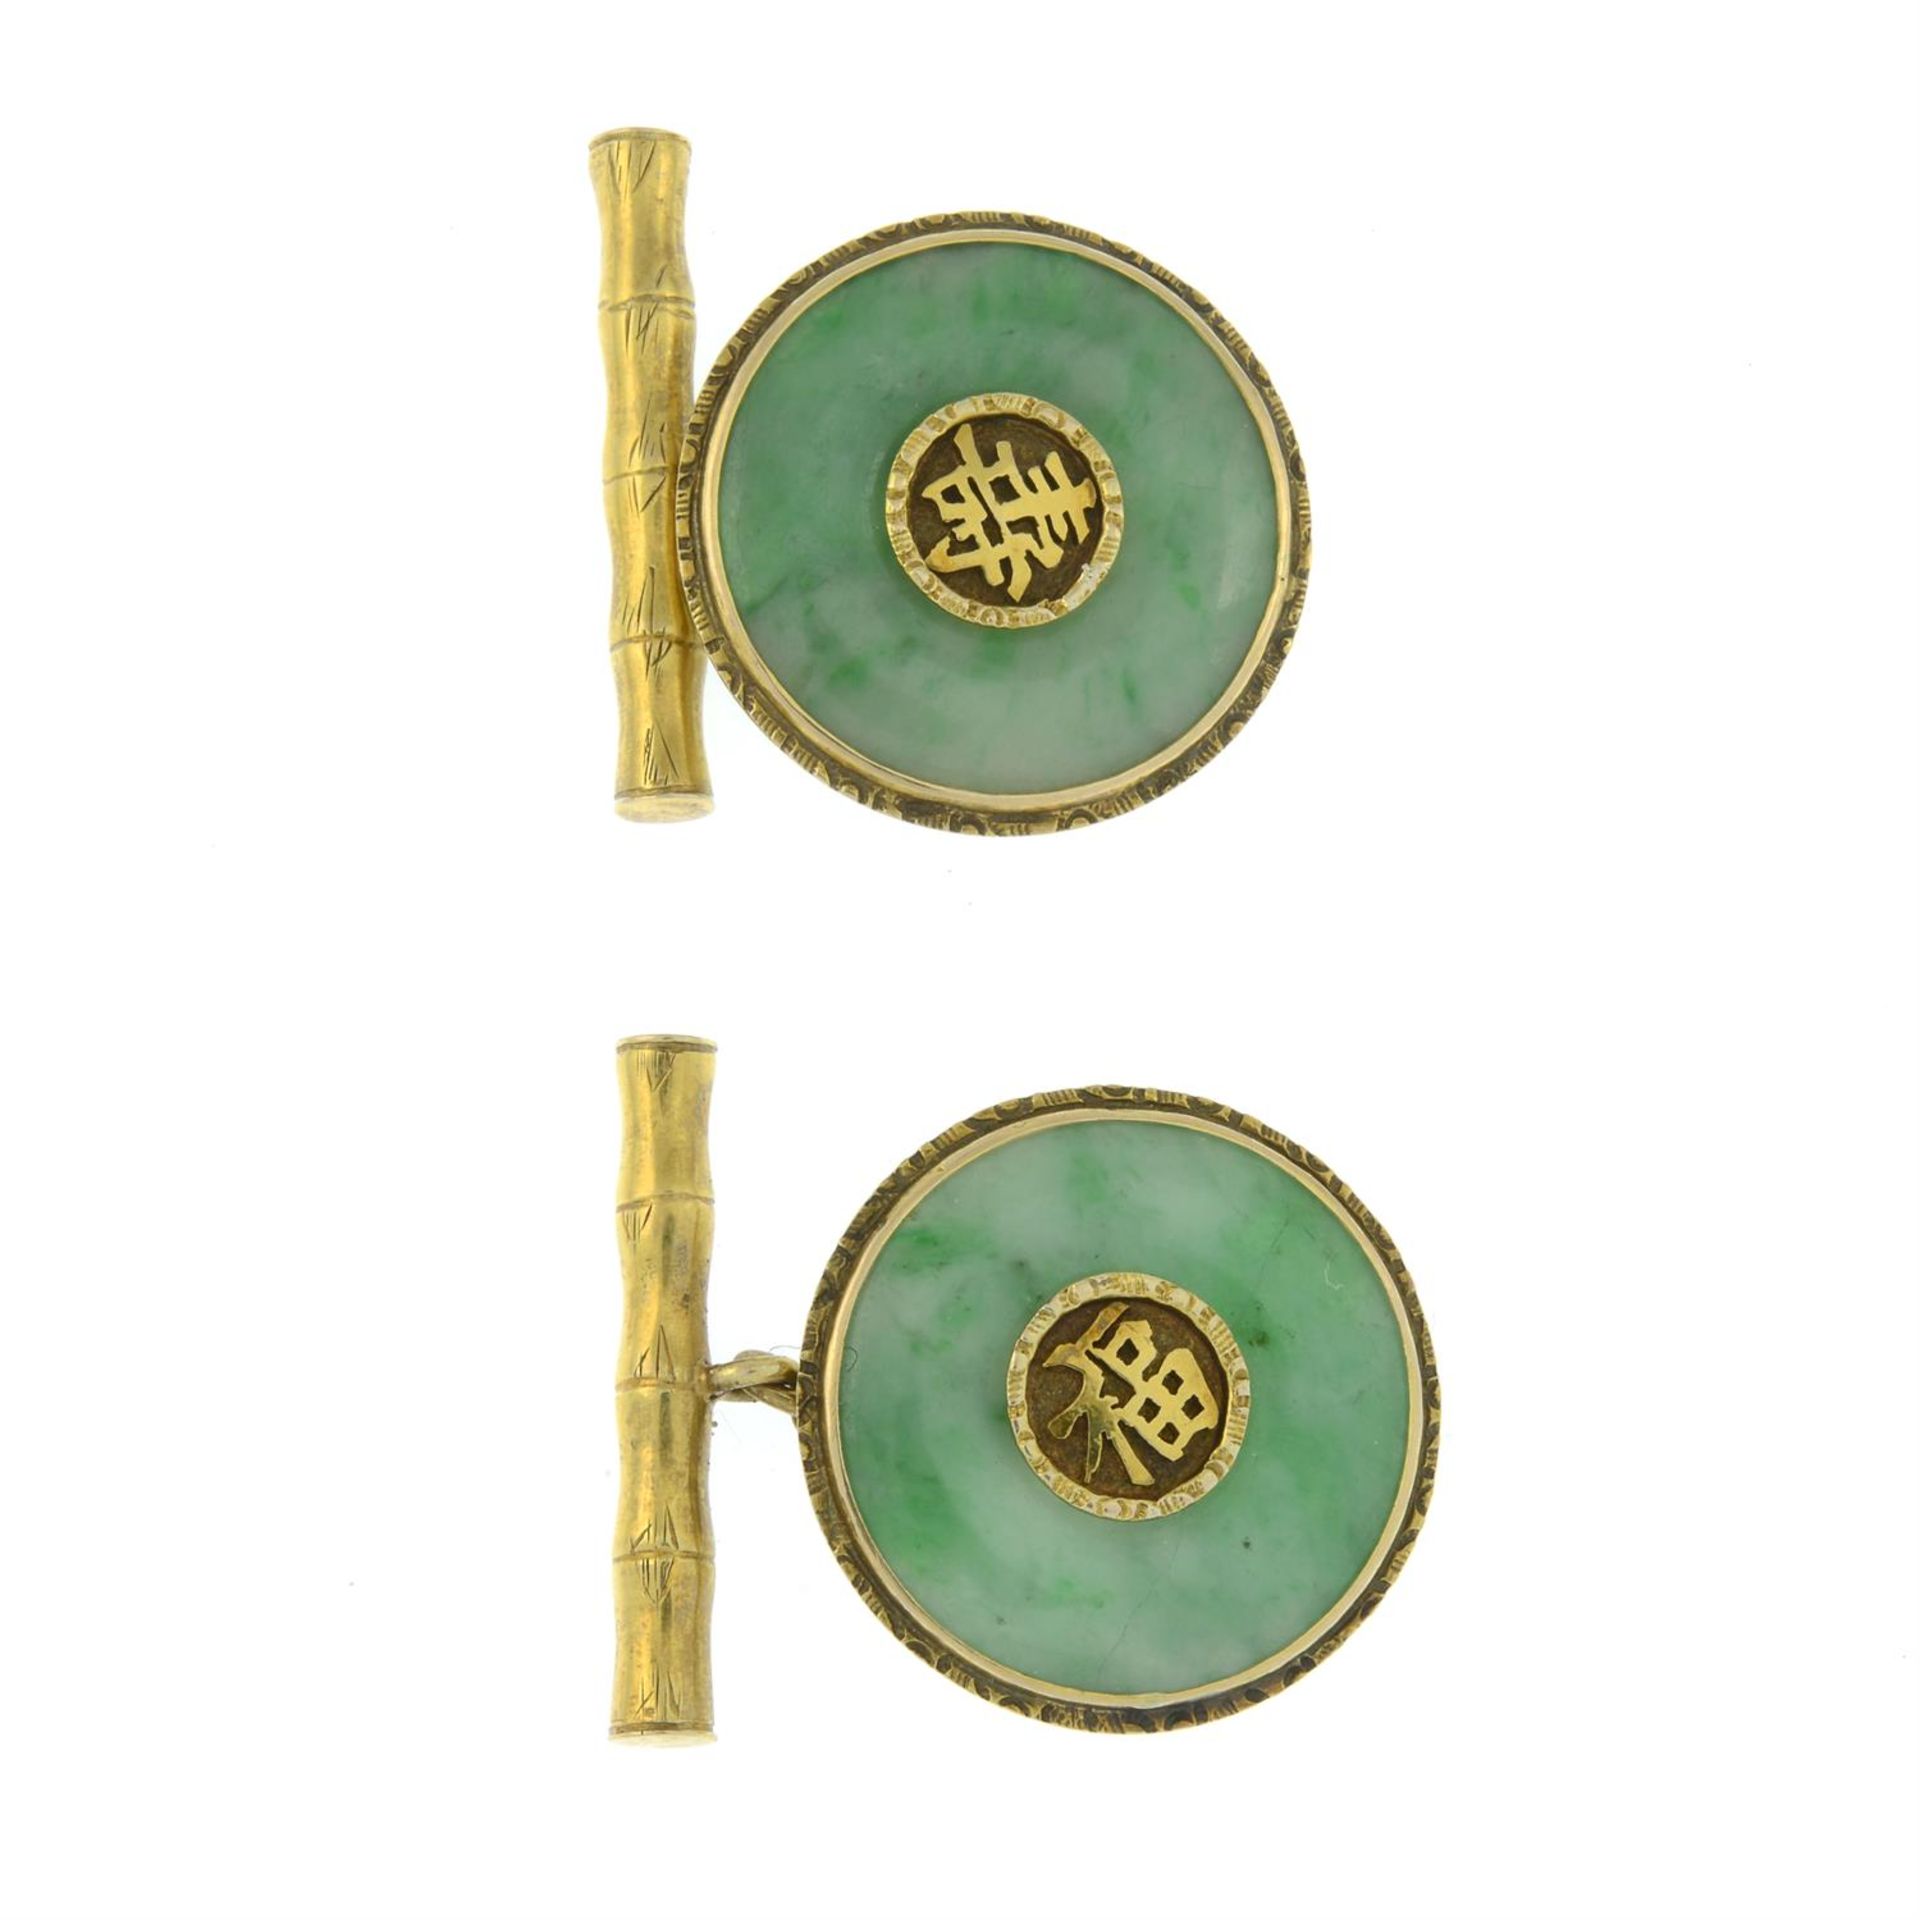 A pair of jade cufflinks, with bamboo motif.